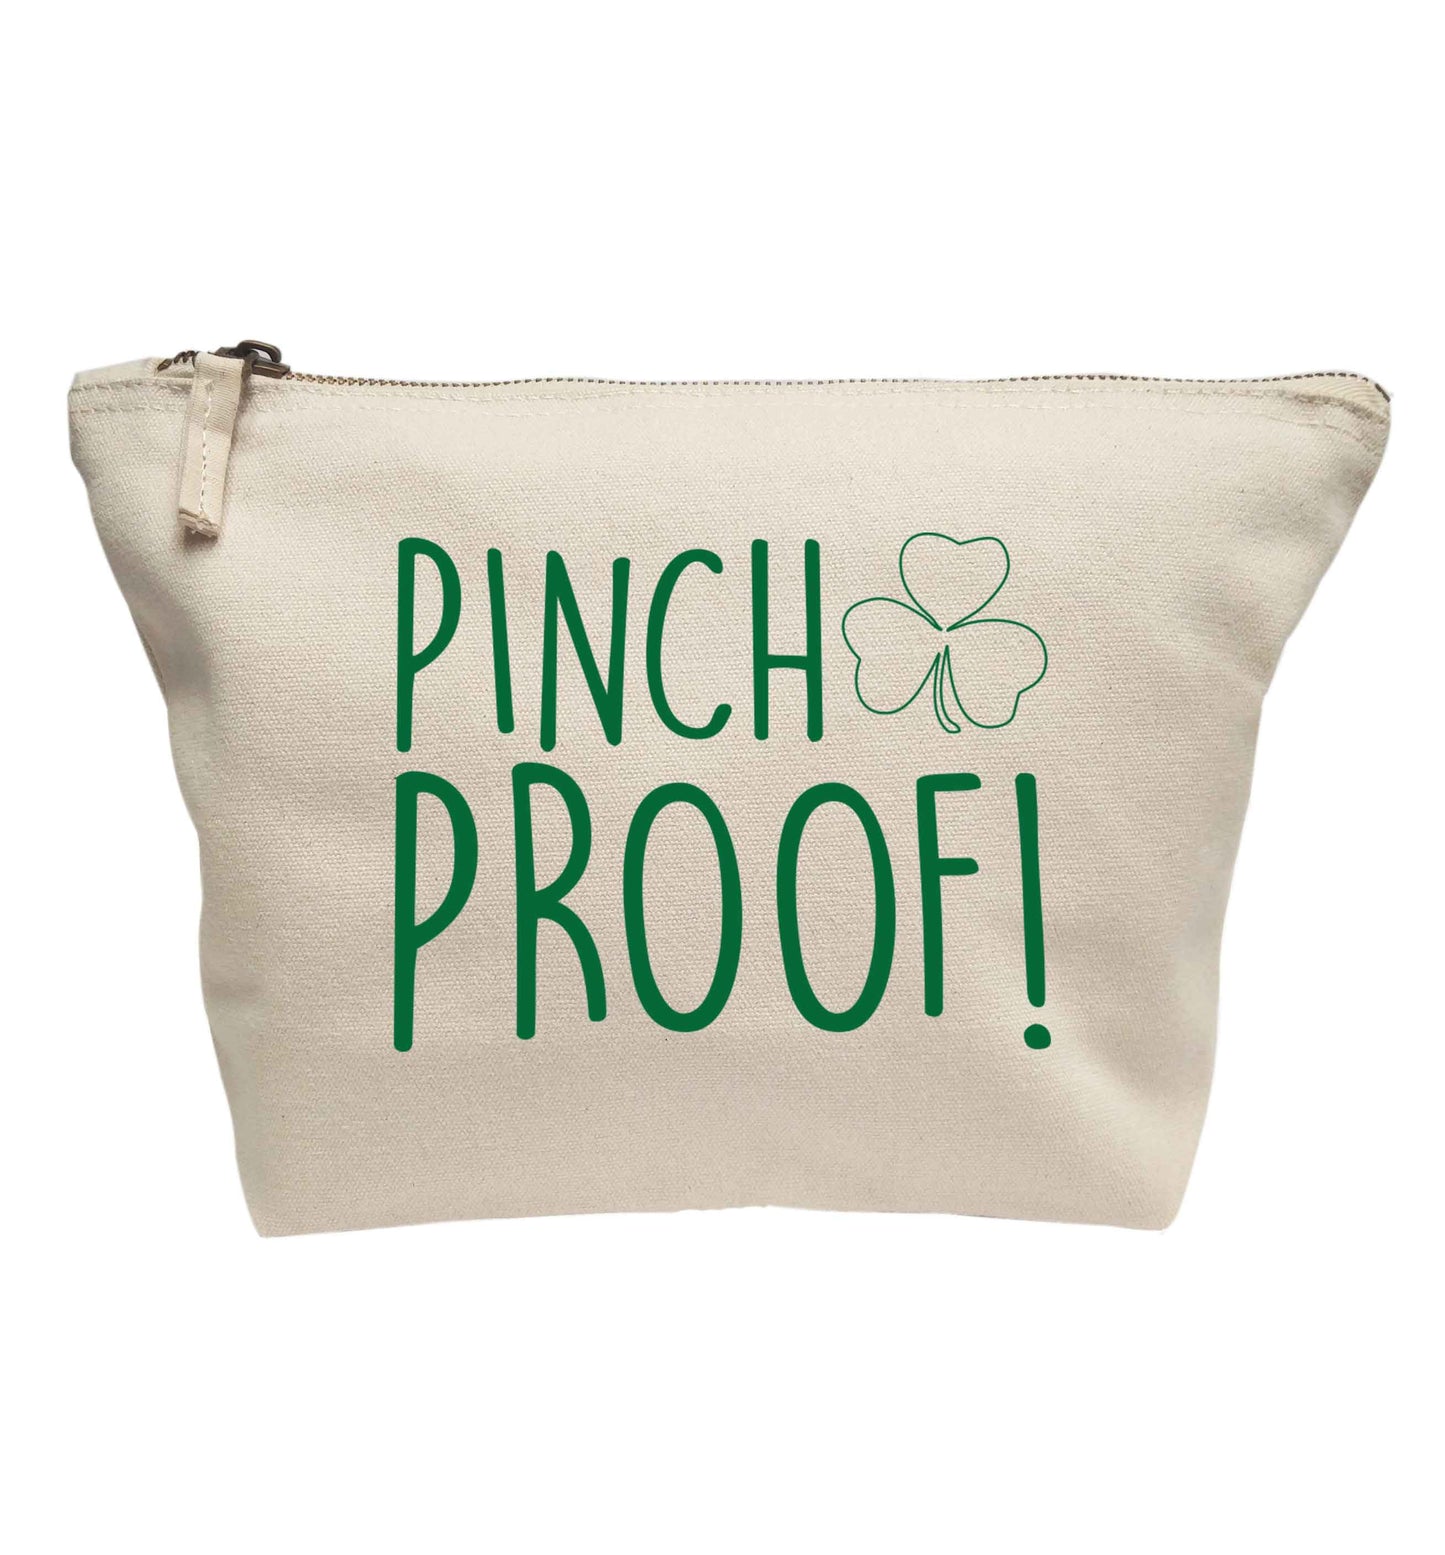 Pinch Proof | Makeup / wash bag